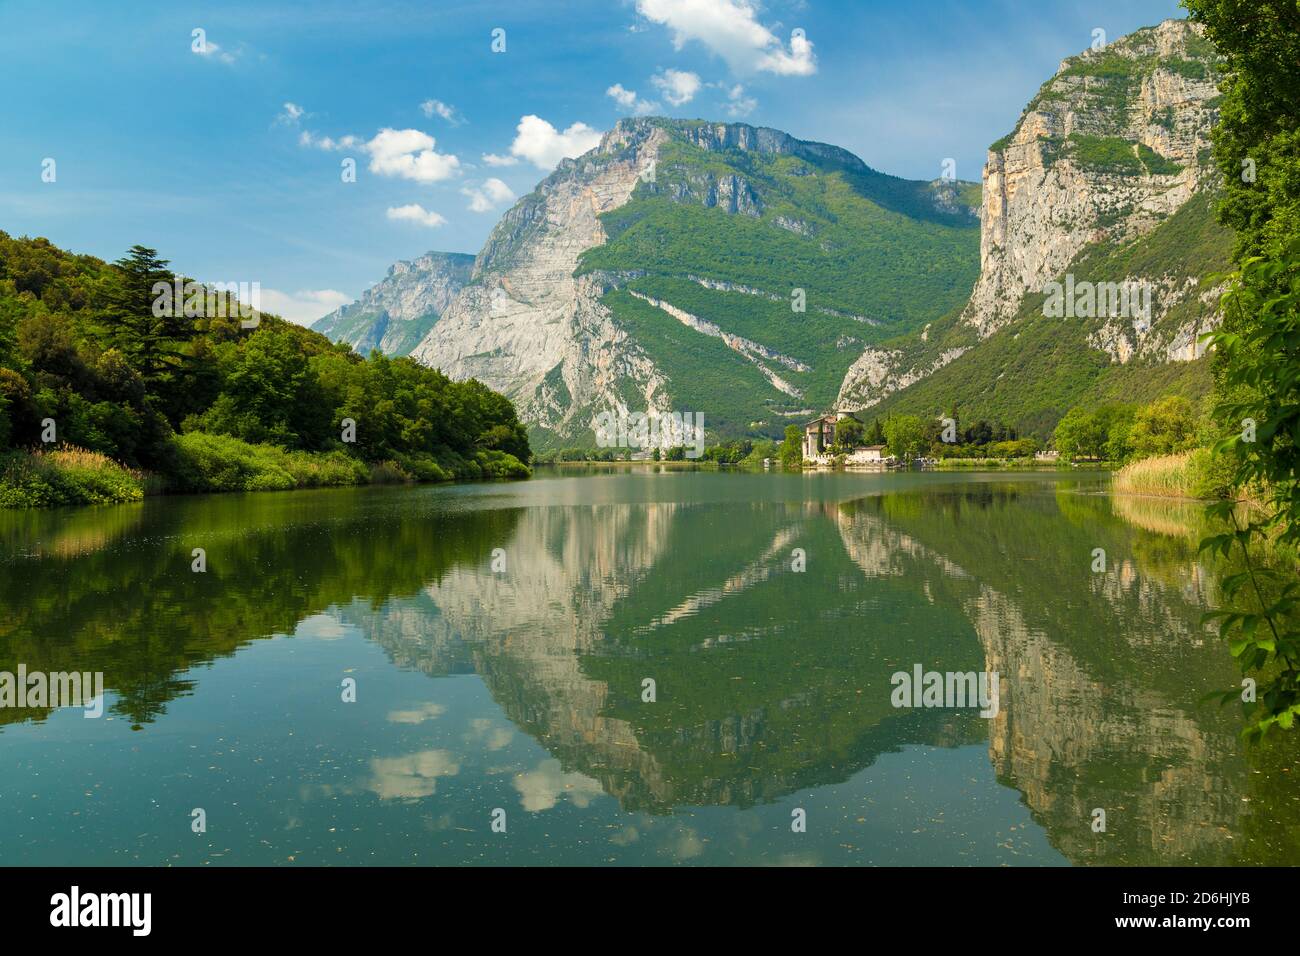 Lago Toblino, l'un des lacs cachés de l'Italie, les lacs italiens, Italie. Banque D'Images